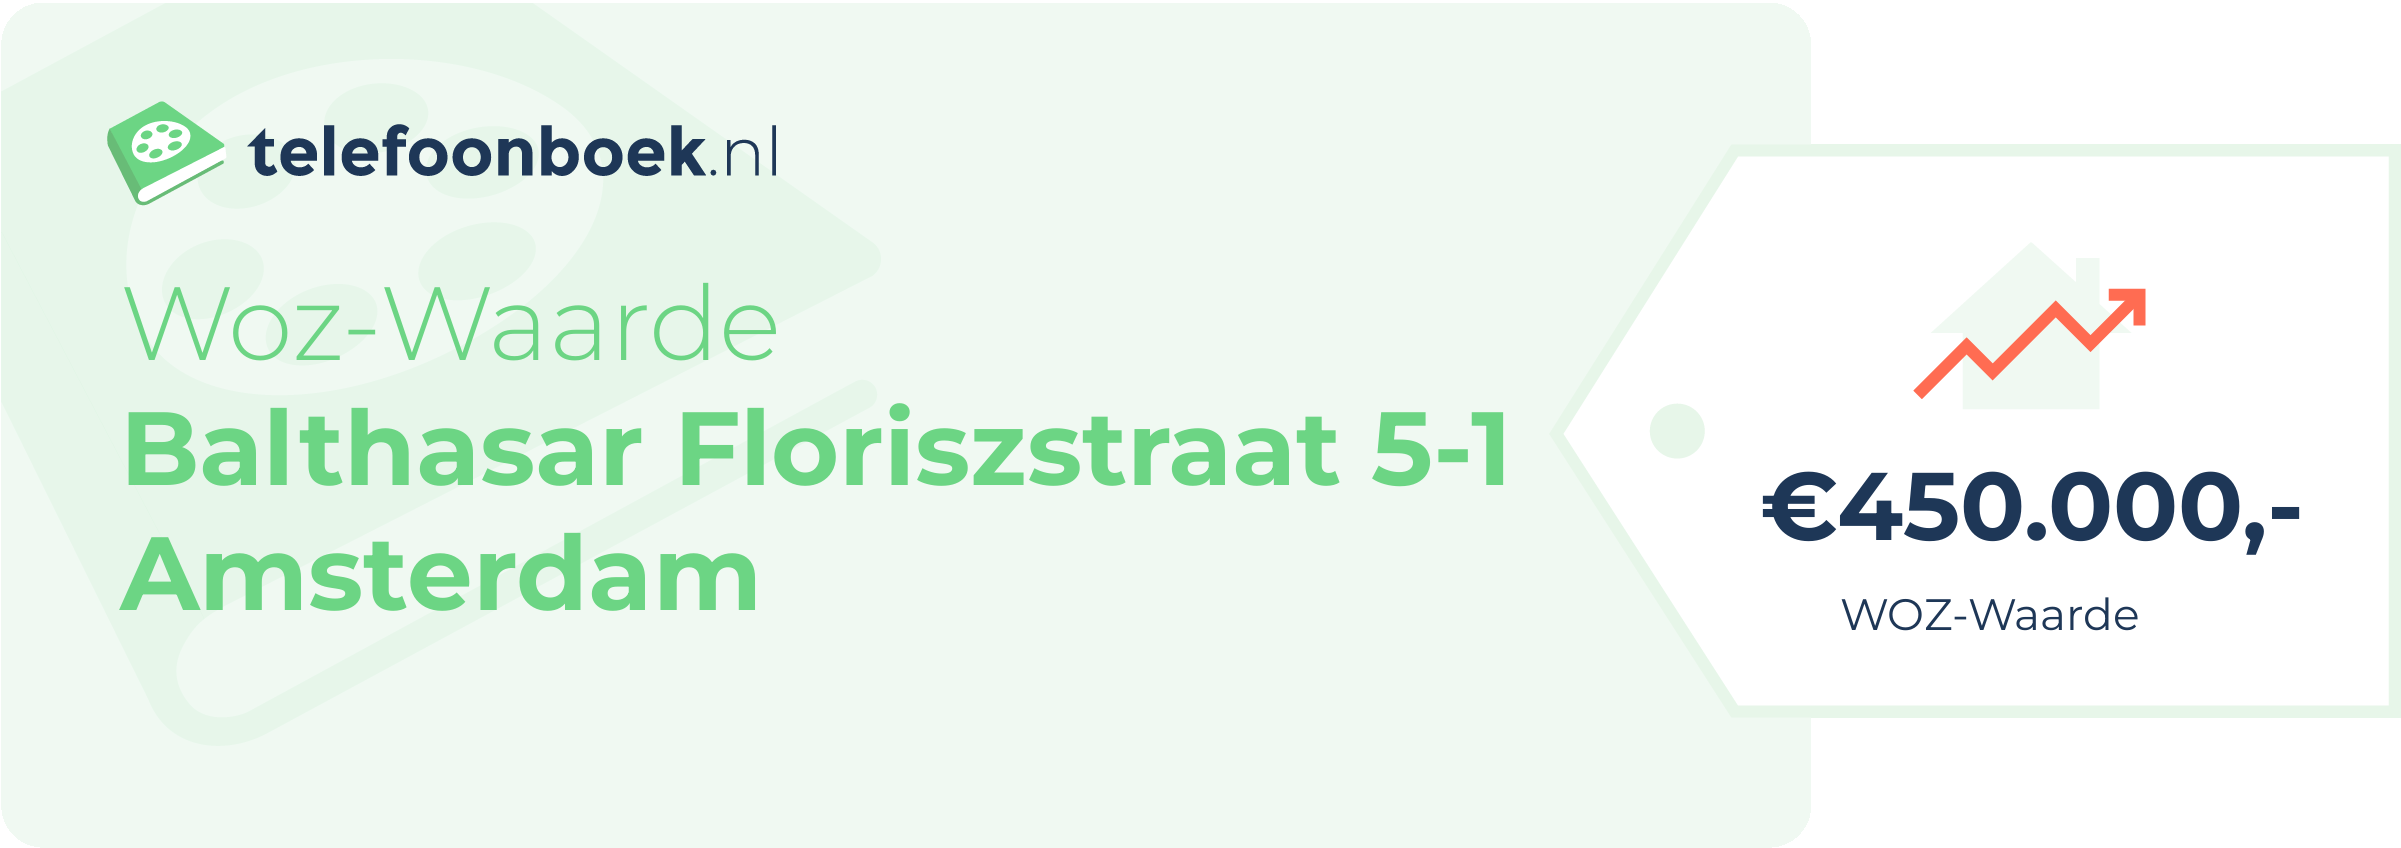 WOZ-waarde Balthasar Floriszstraat 5-1 Amsterdam